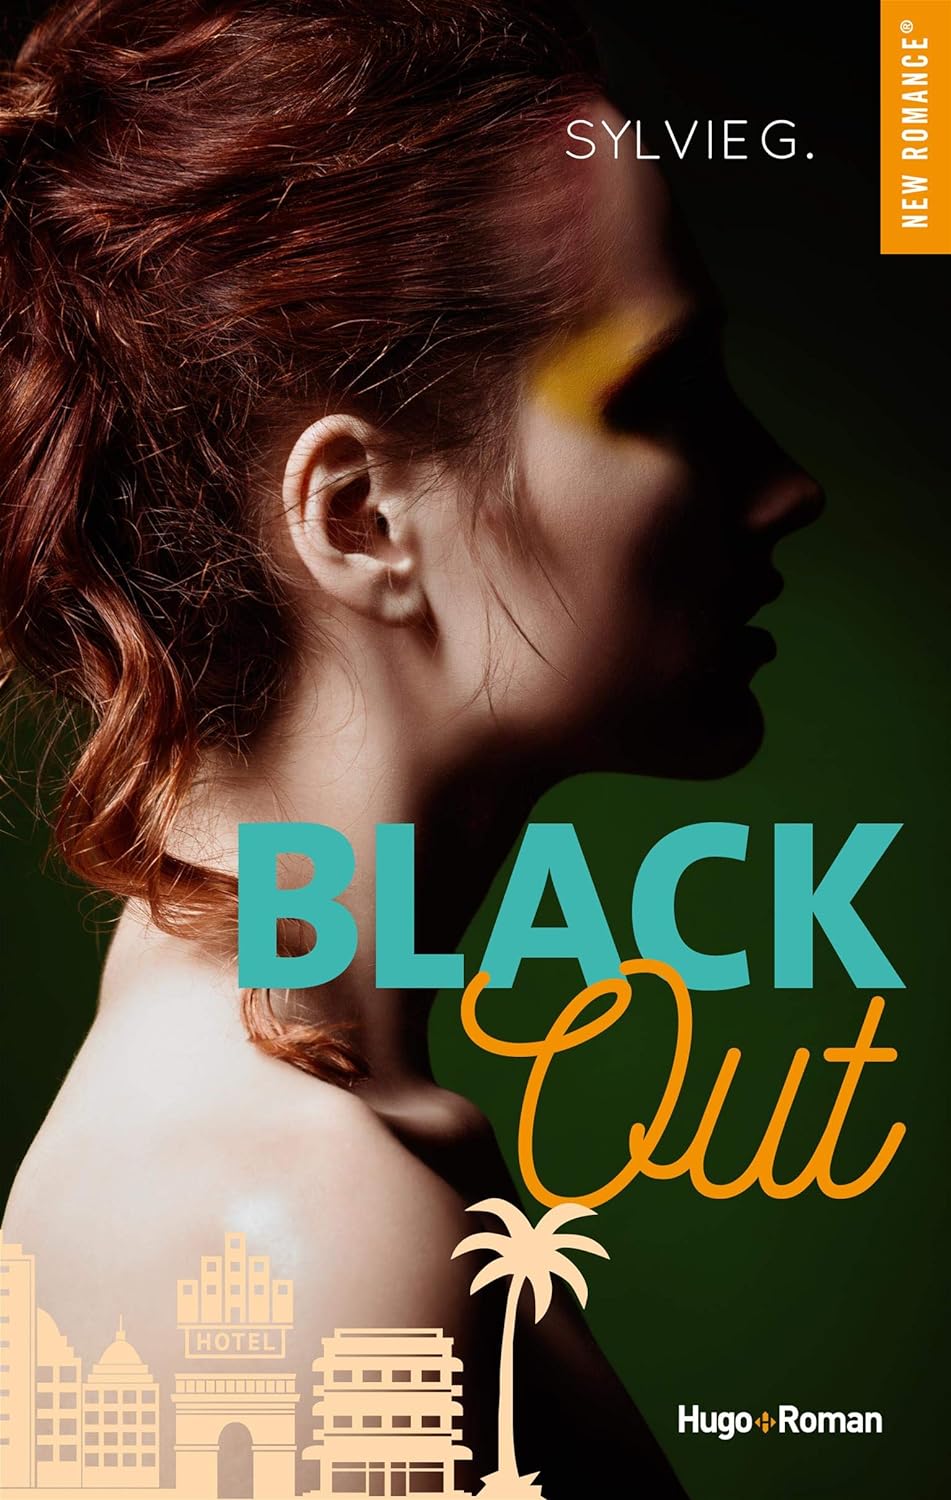 Black-out (FR) - Sylvie G.